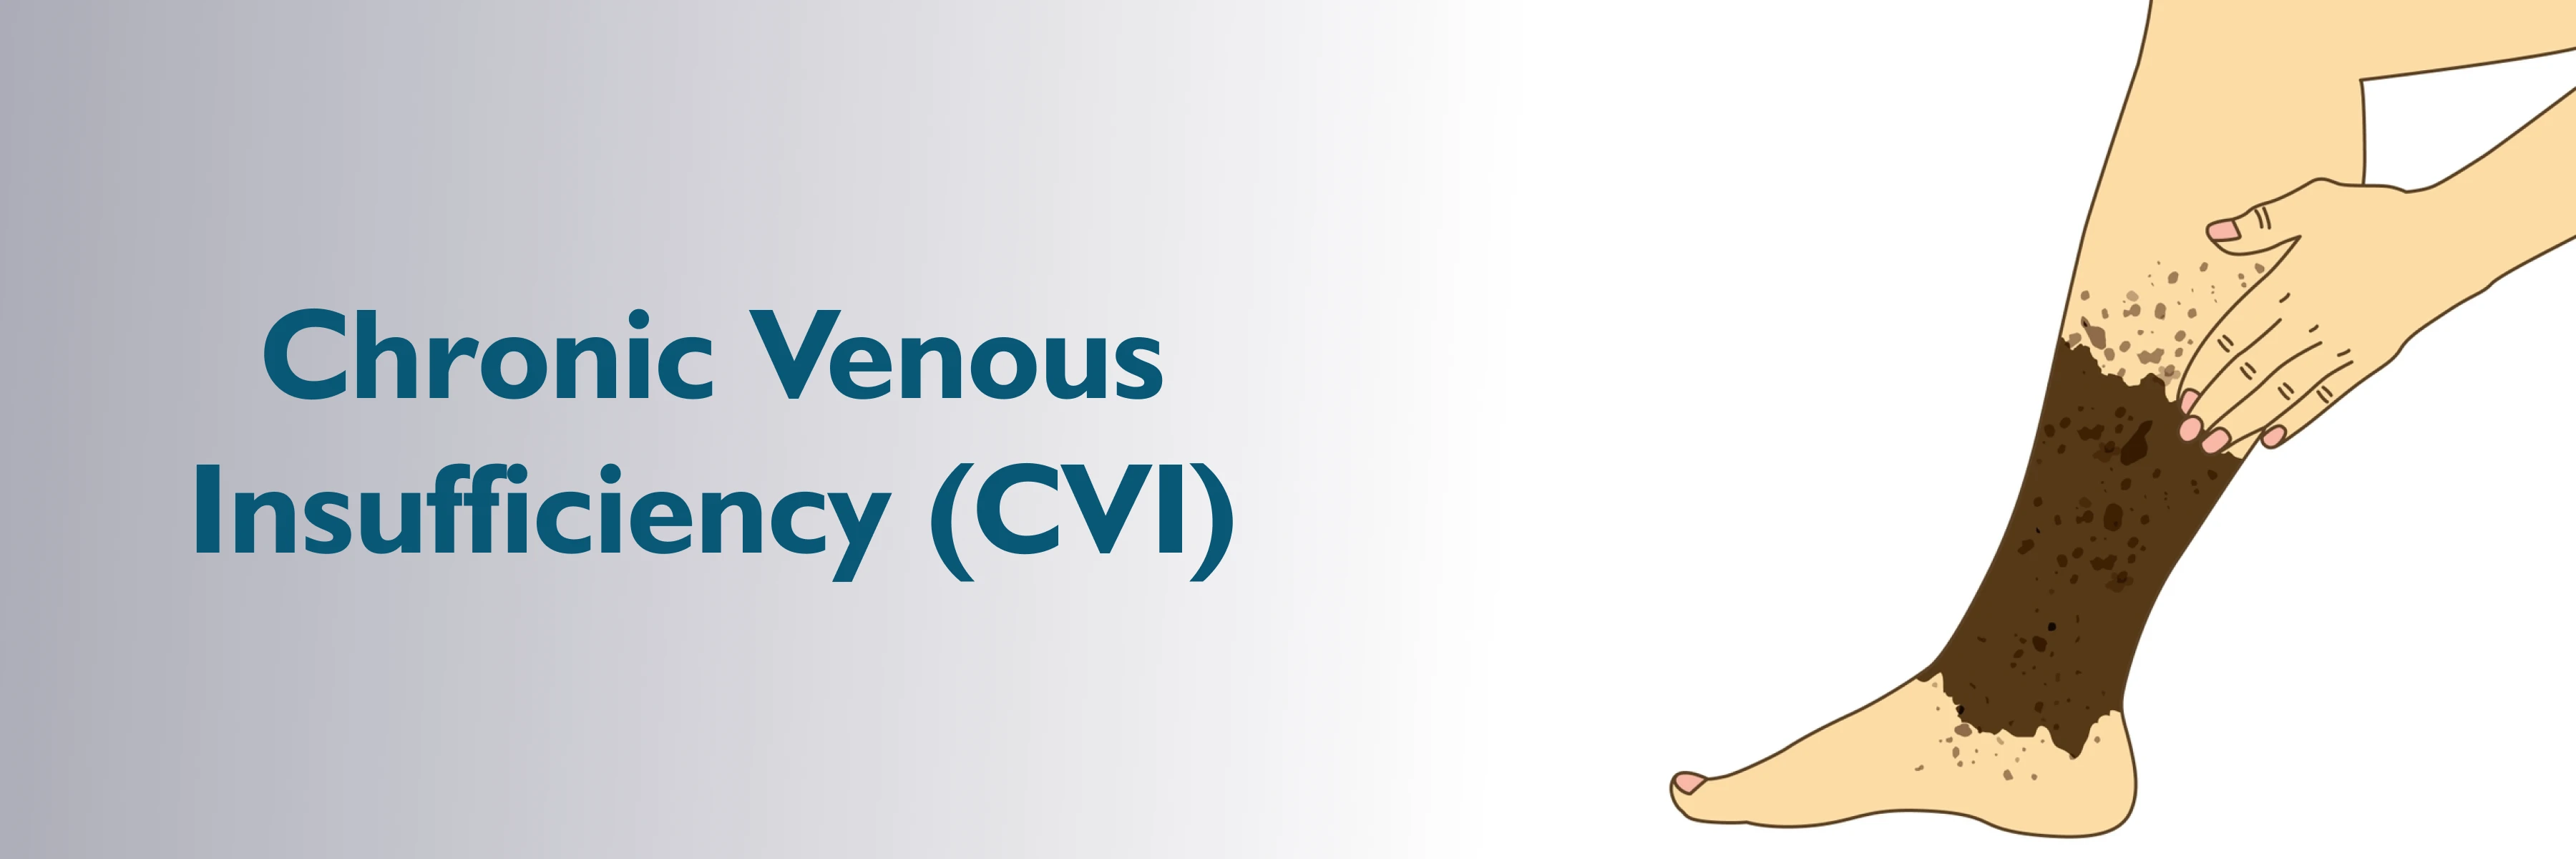 Chronic Venous Insufficiency (CVI)